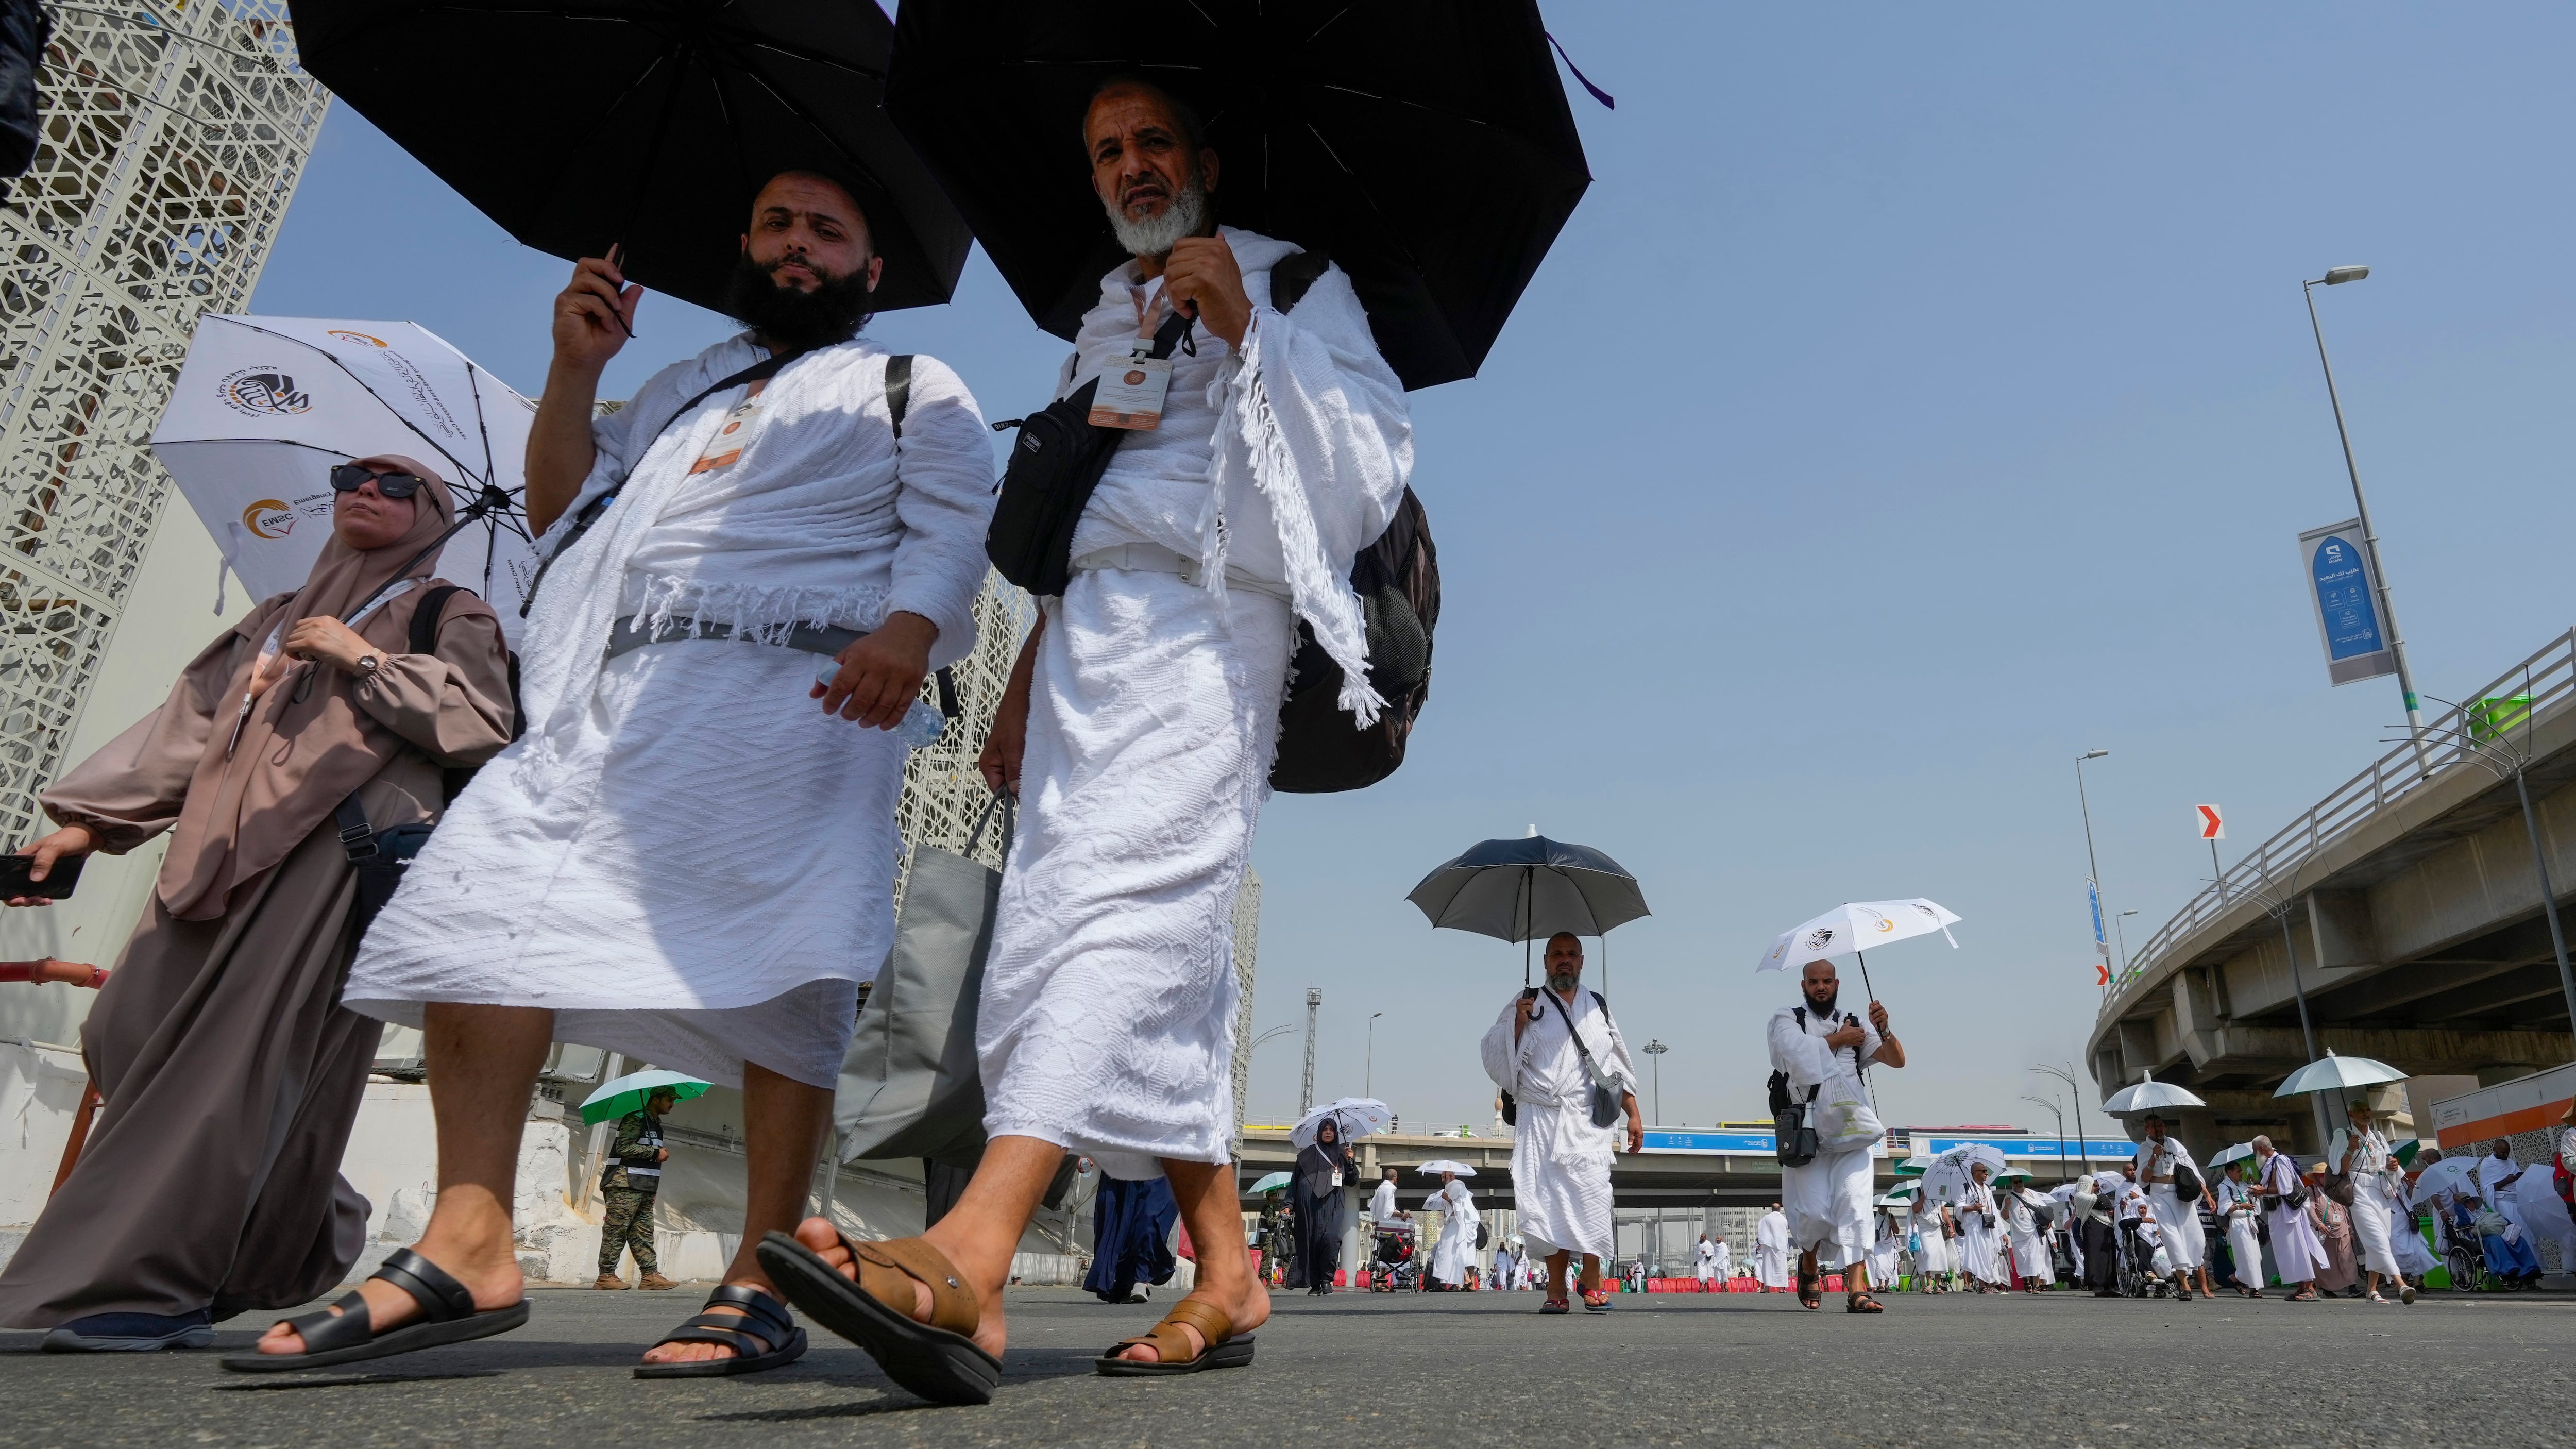 Around two million Muslim pilgrims are expected (AP)